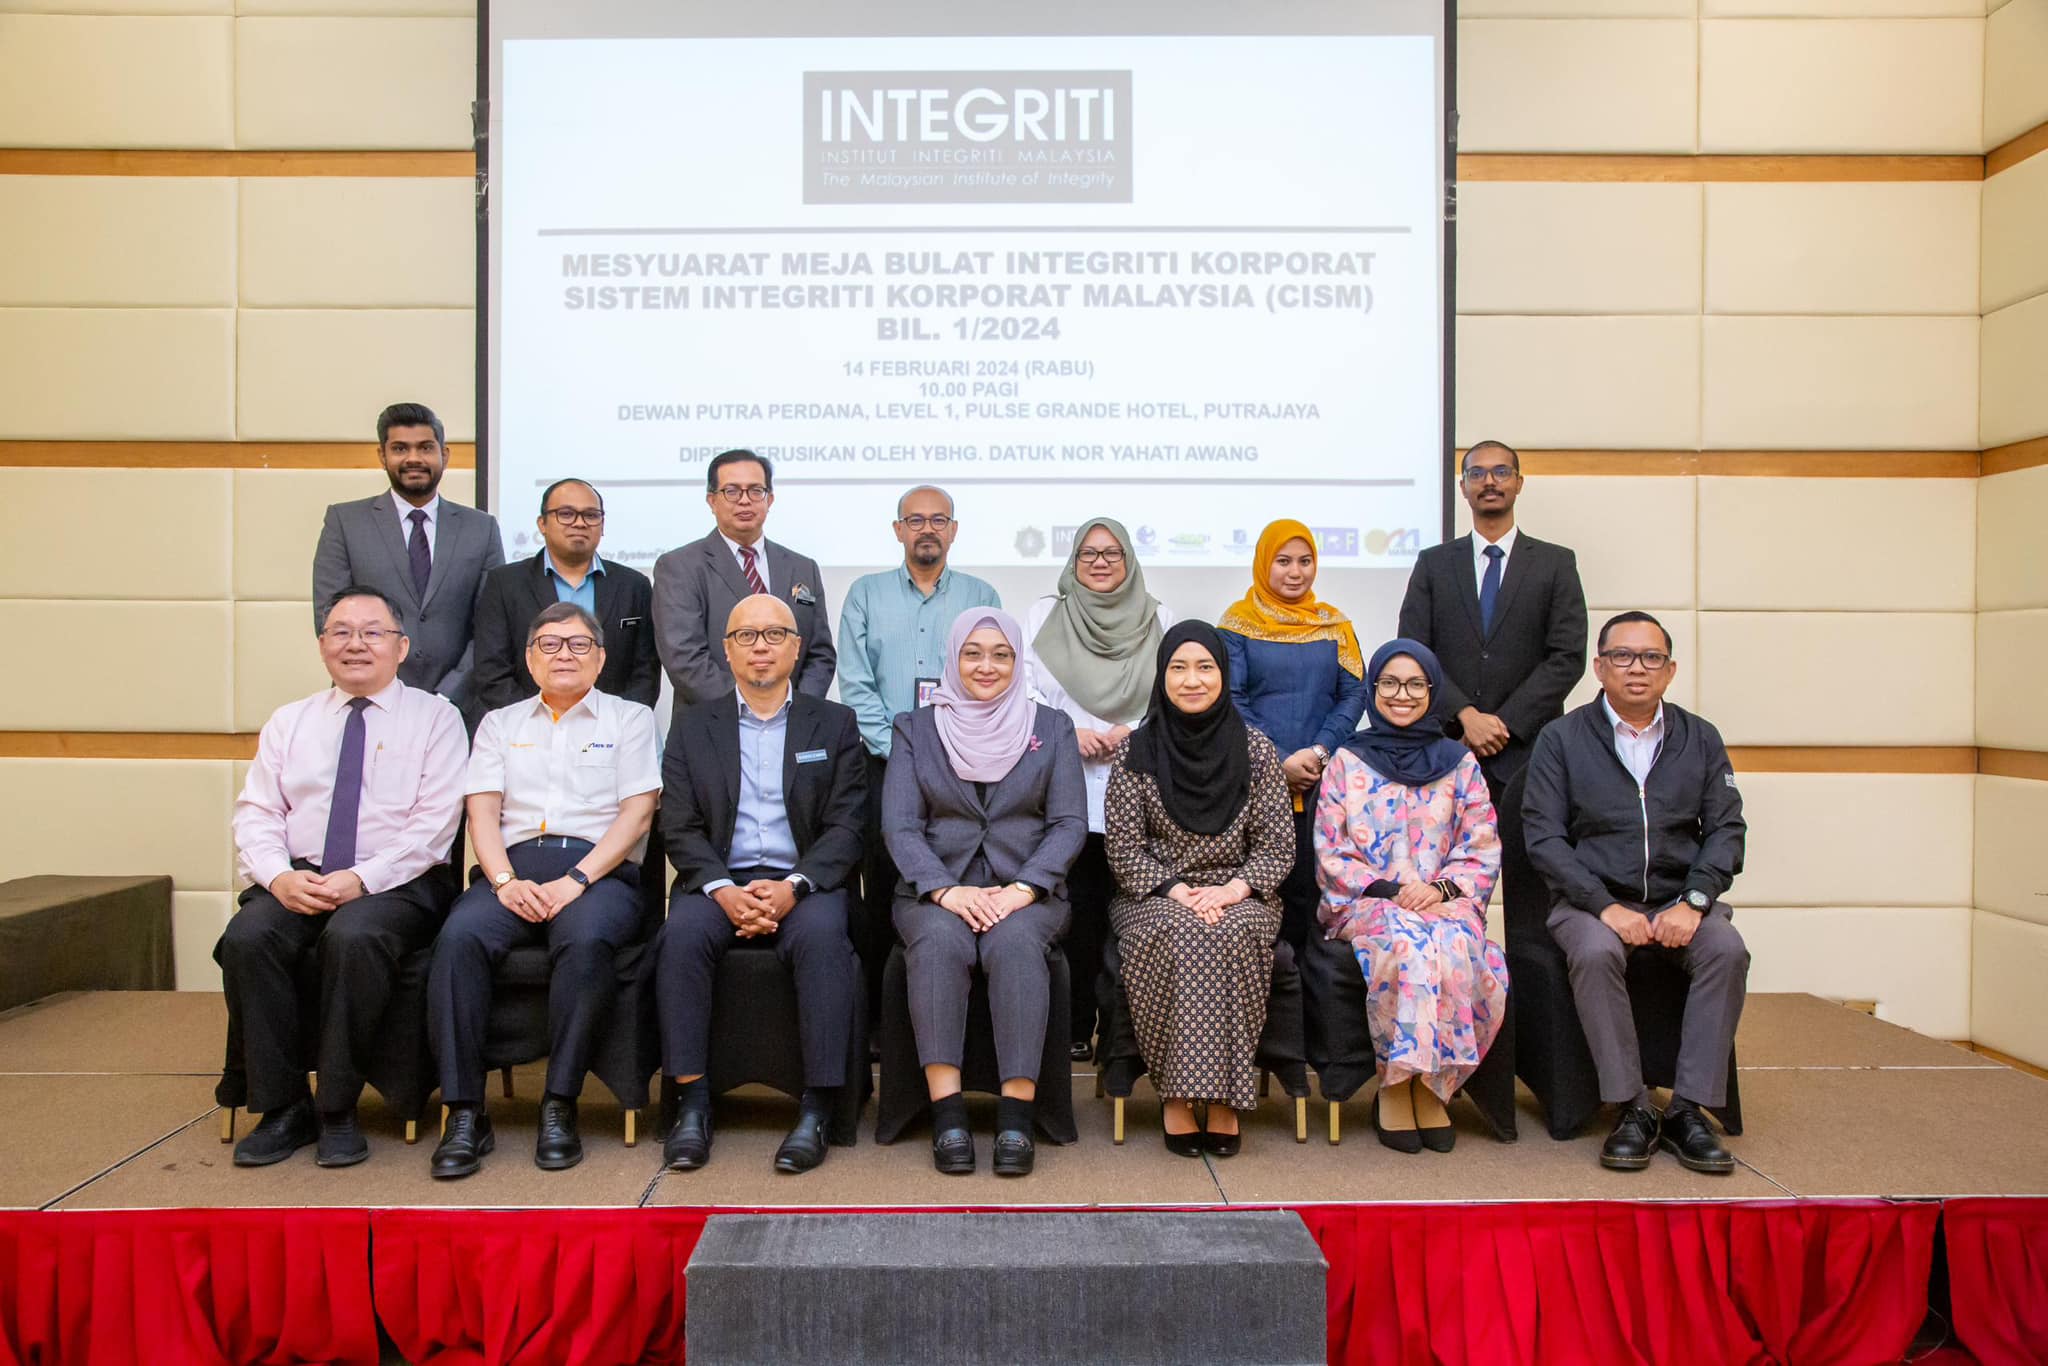 Mesyuarat Meja Bulat Integriti Korporat (RTD) Sistem Integriti Korporat Malaysia (CISM)